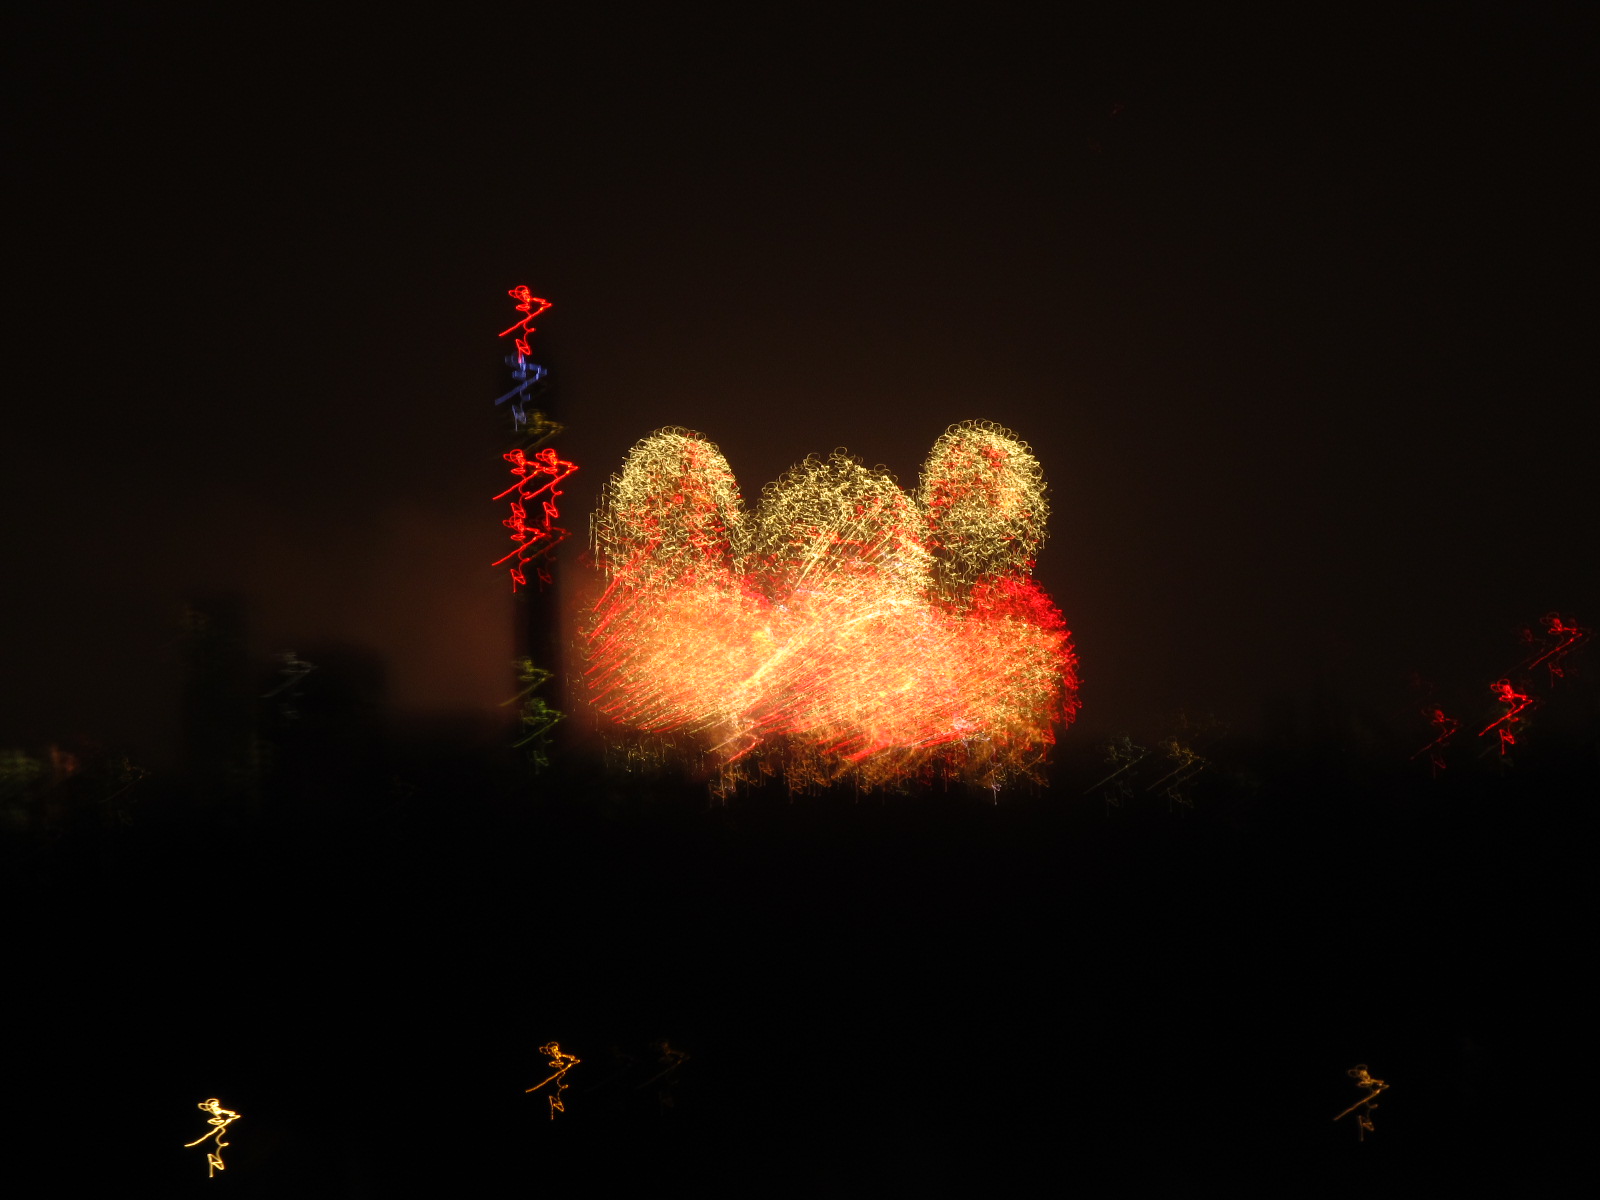 London Eye fireworks seen from Primrose Hill viewpoint